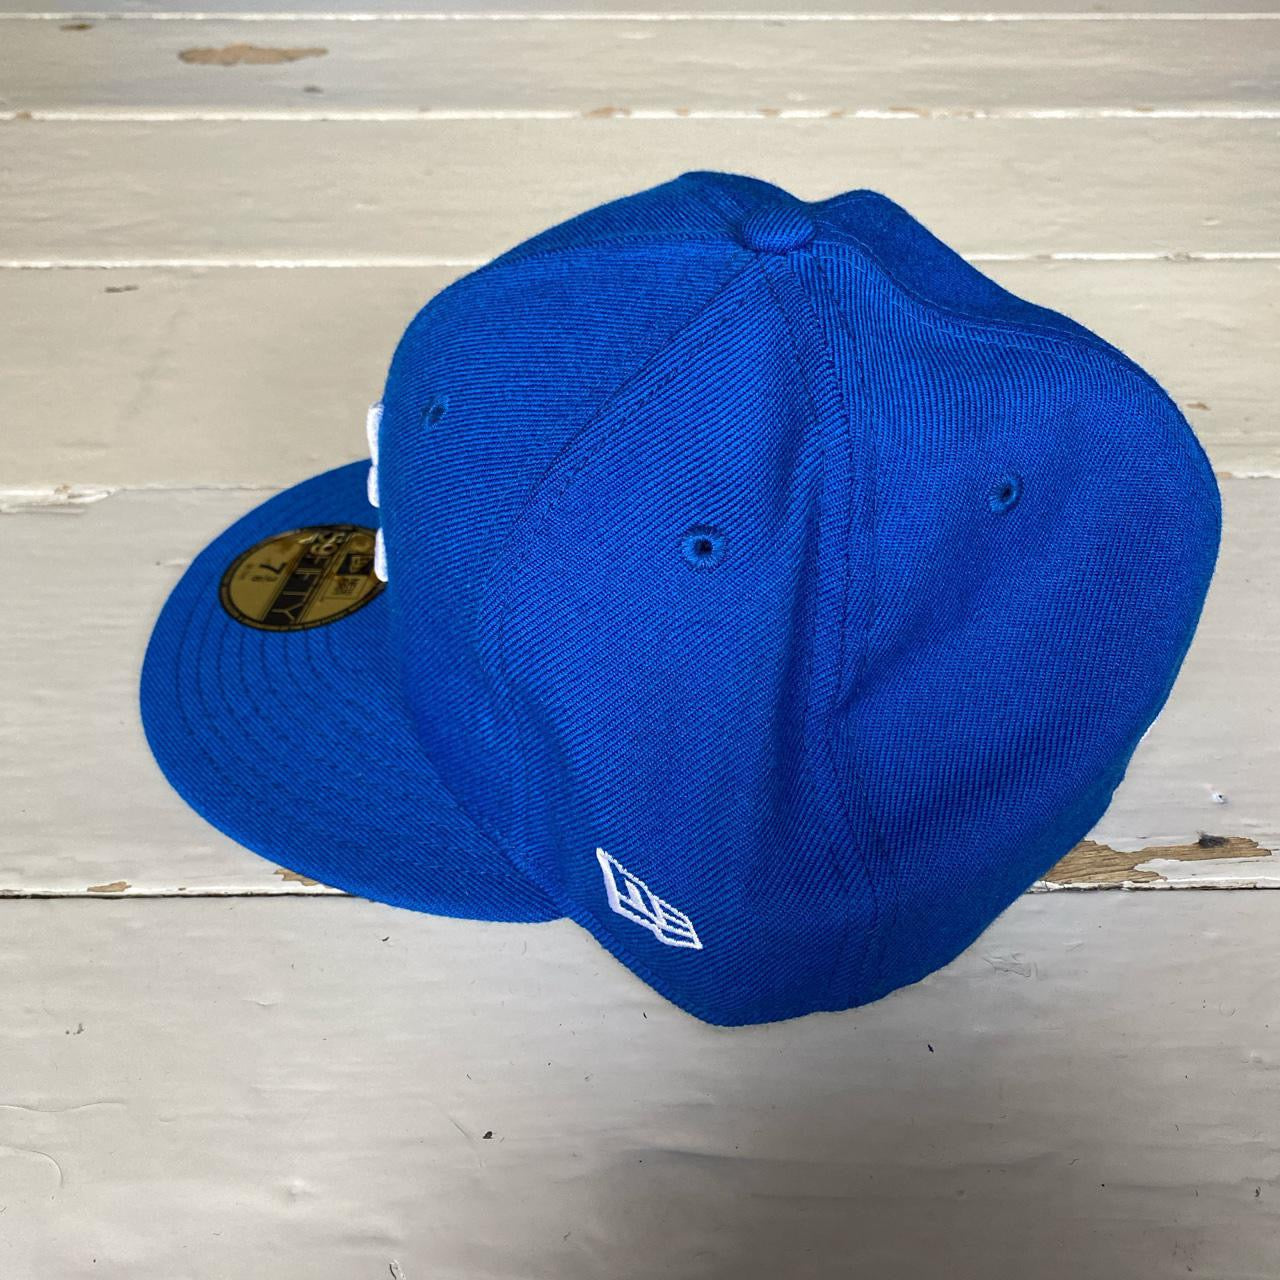 New Era Atlanta Braves Blue Fitted Cap (Size 7 3/8)